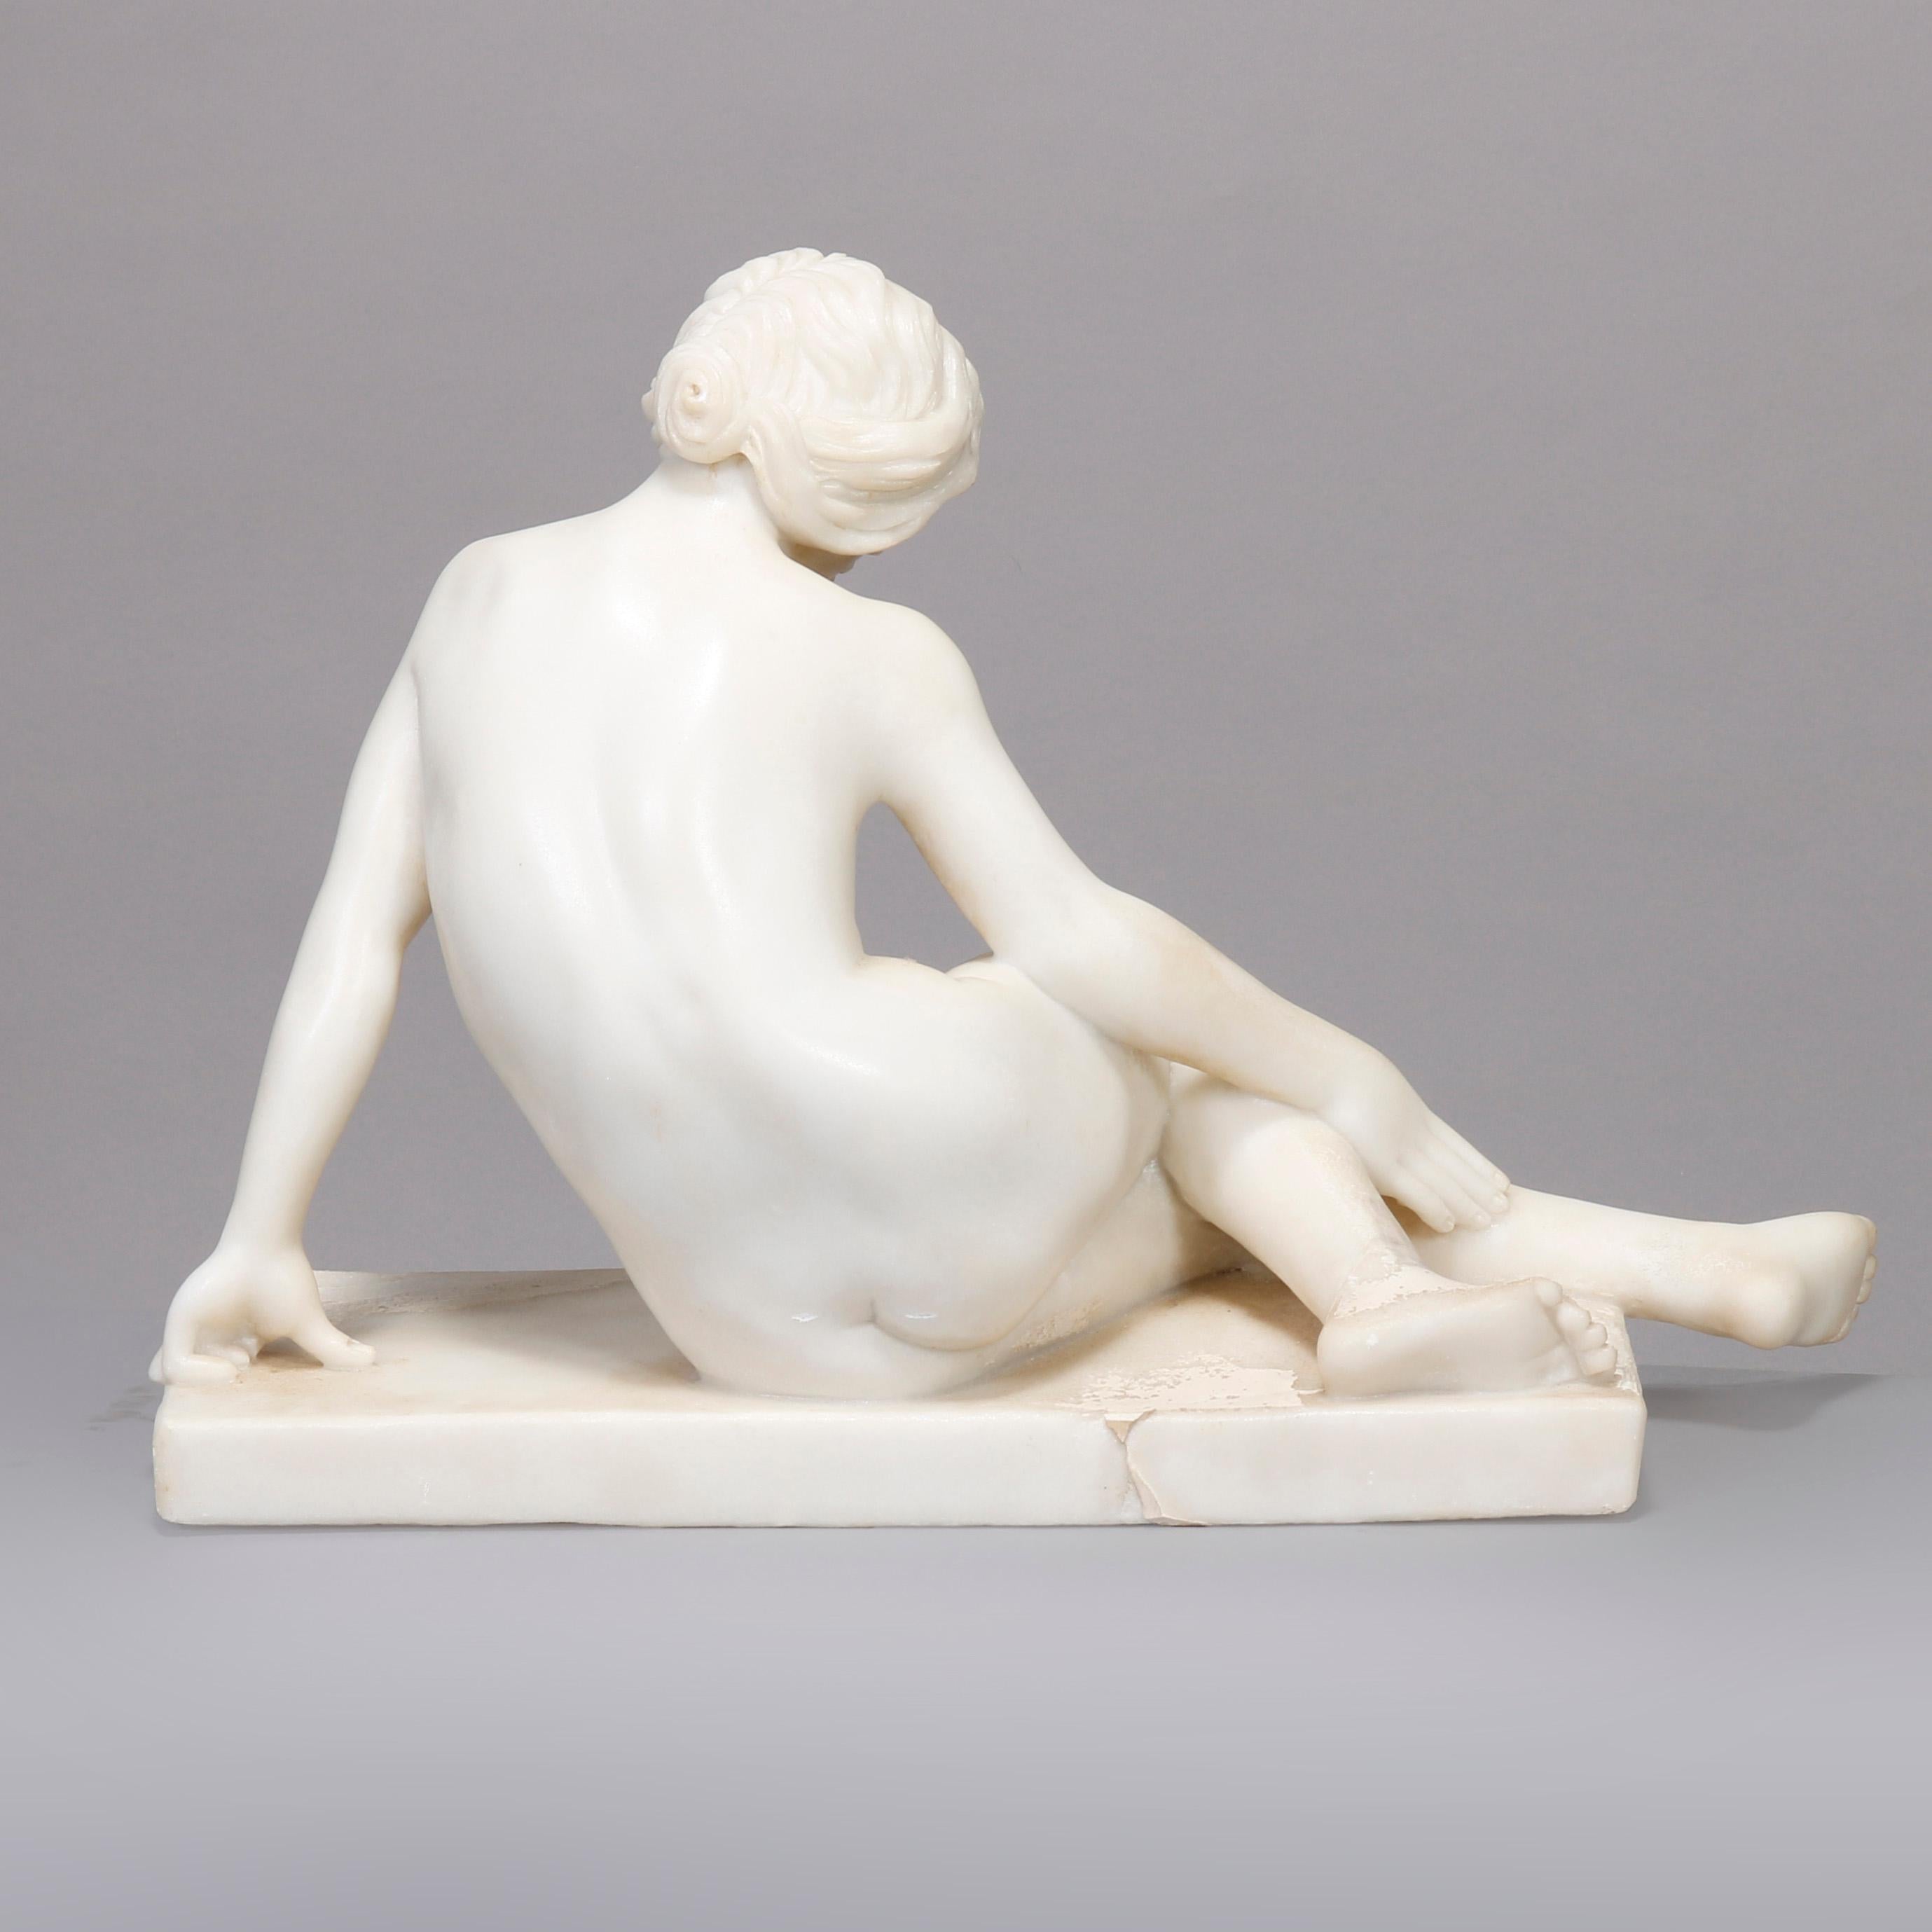 European Art Deco Recumbent Carved Alabaster Nude Portrait Sculpture, Early 20th Century